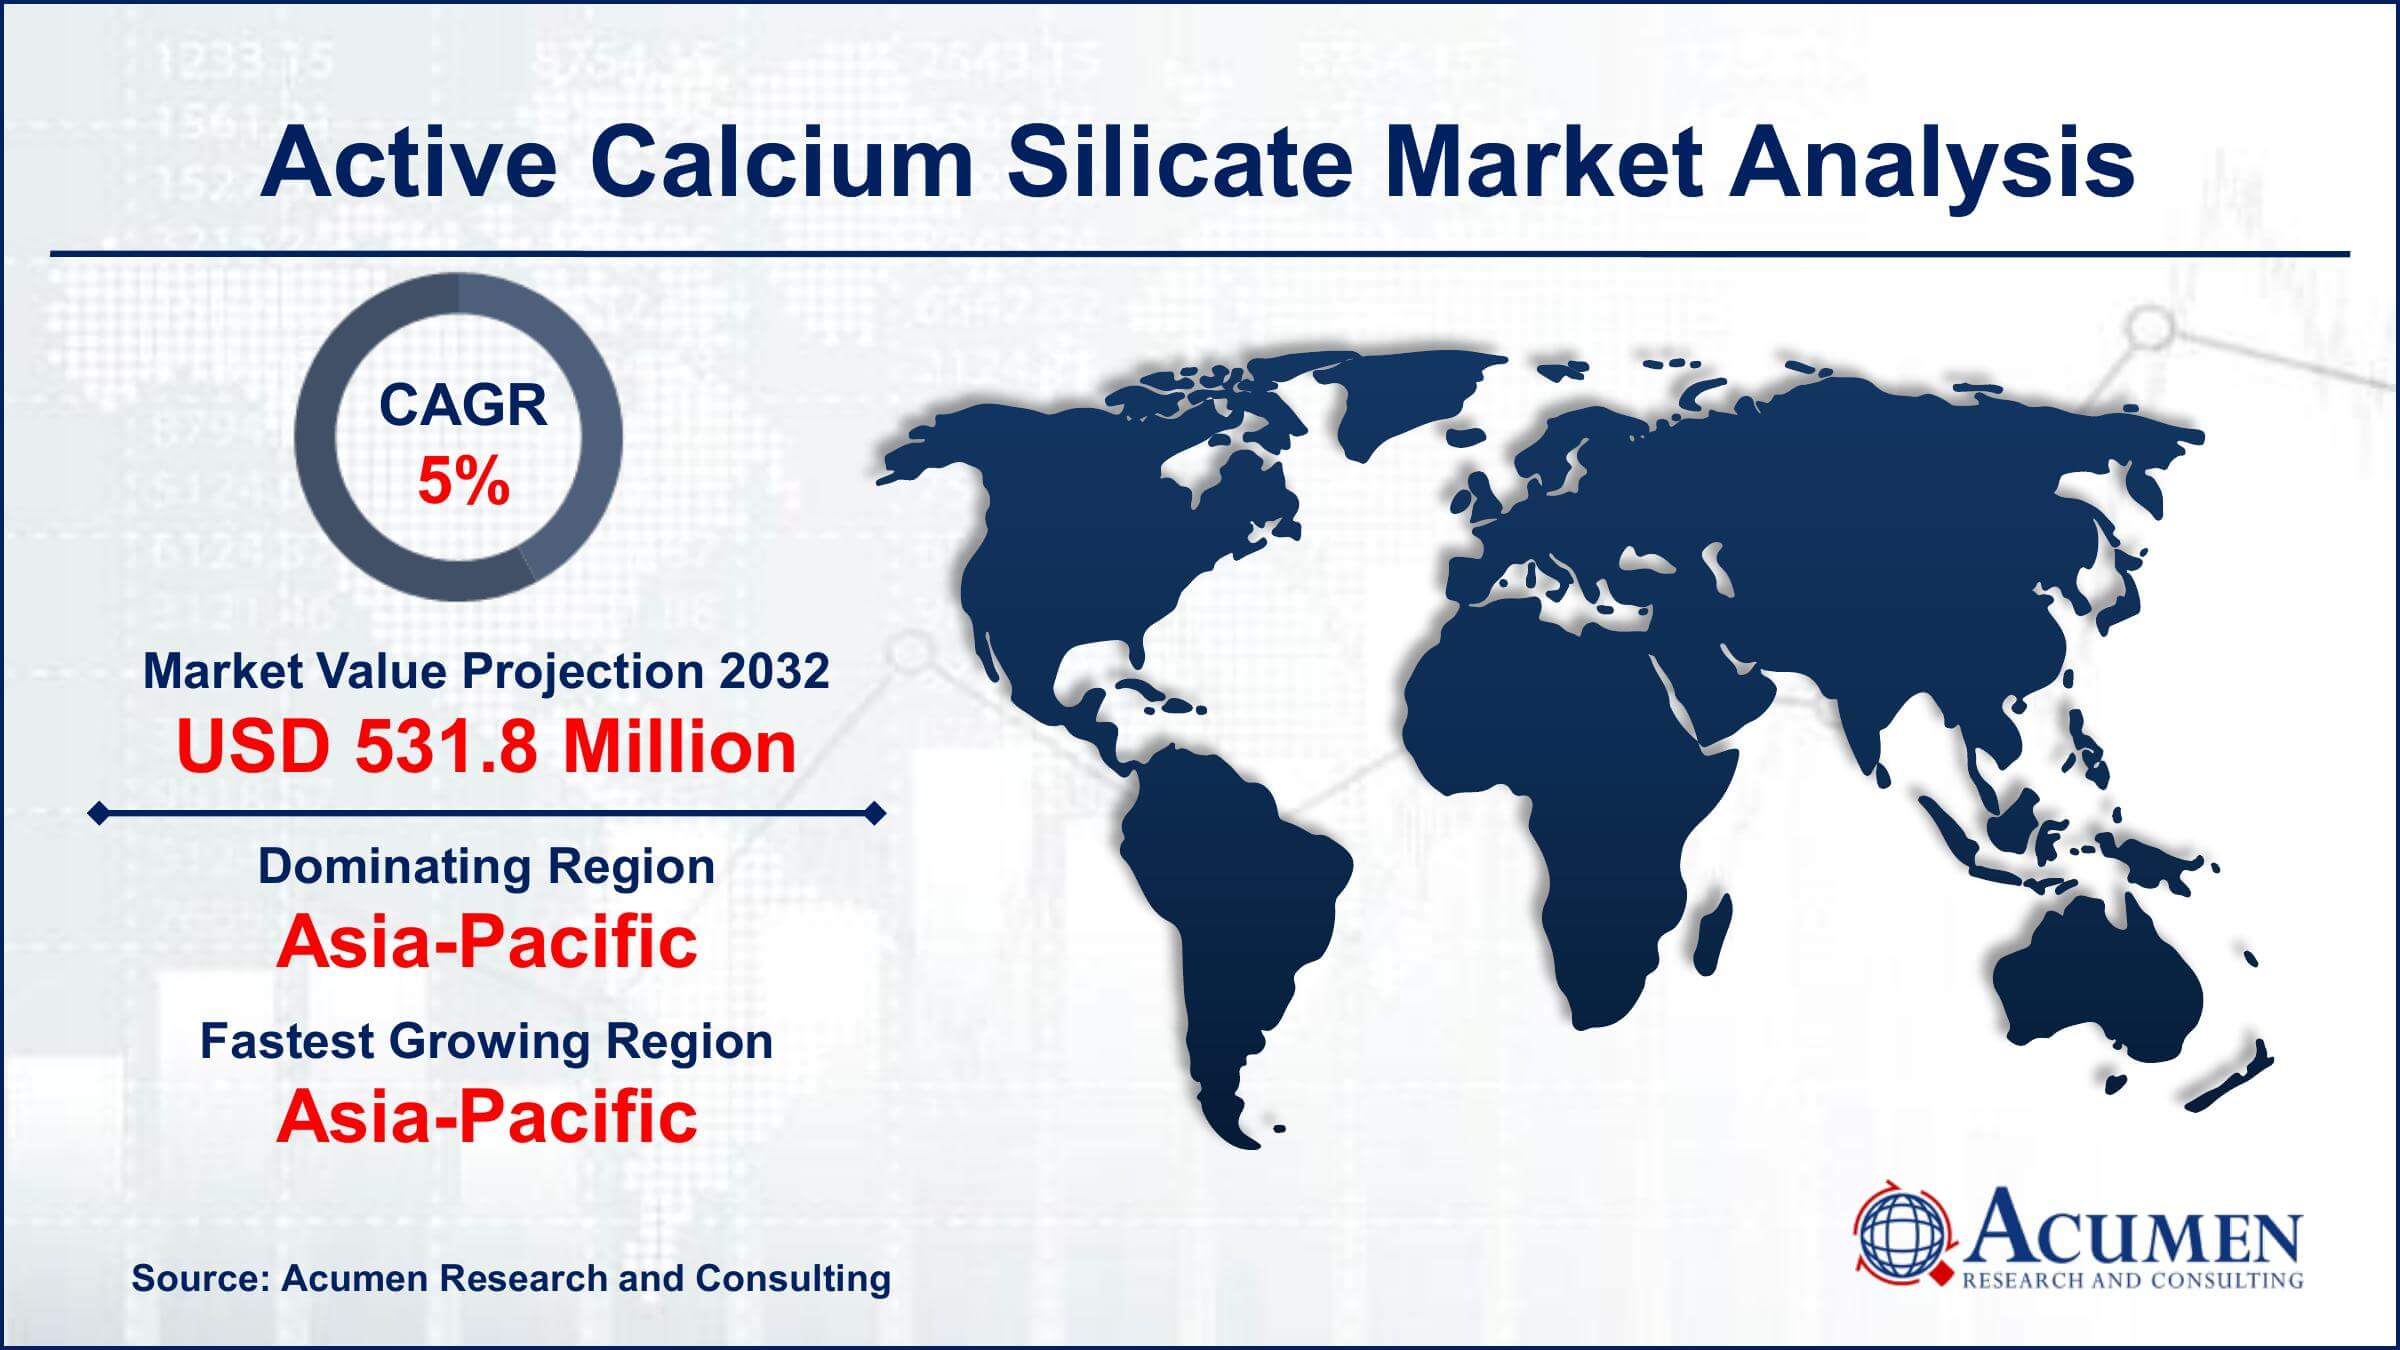 Global Active Calcium Silicate Market Trends